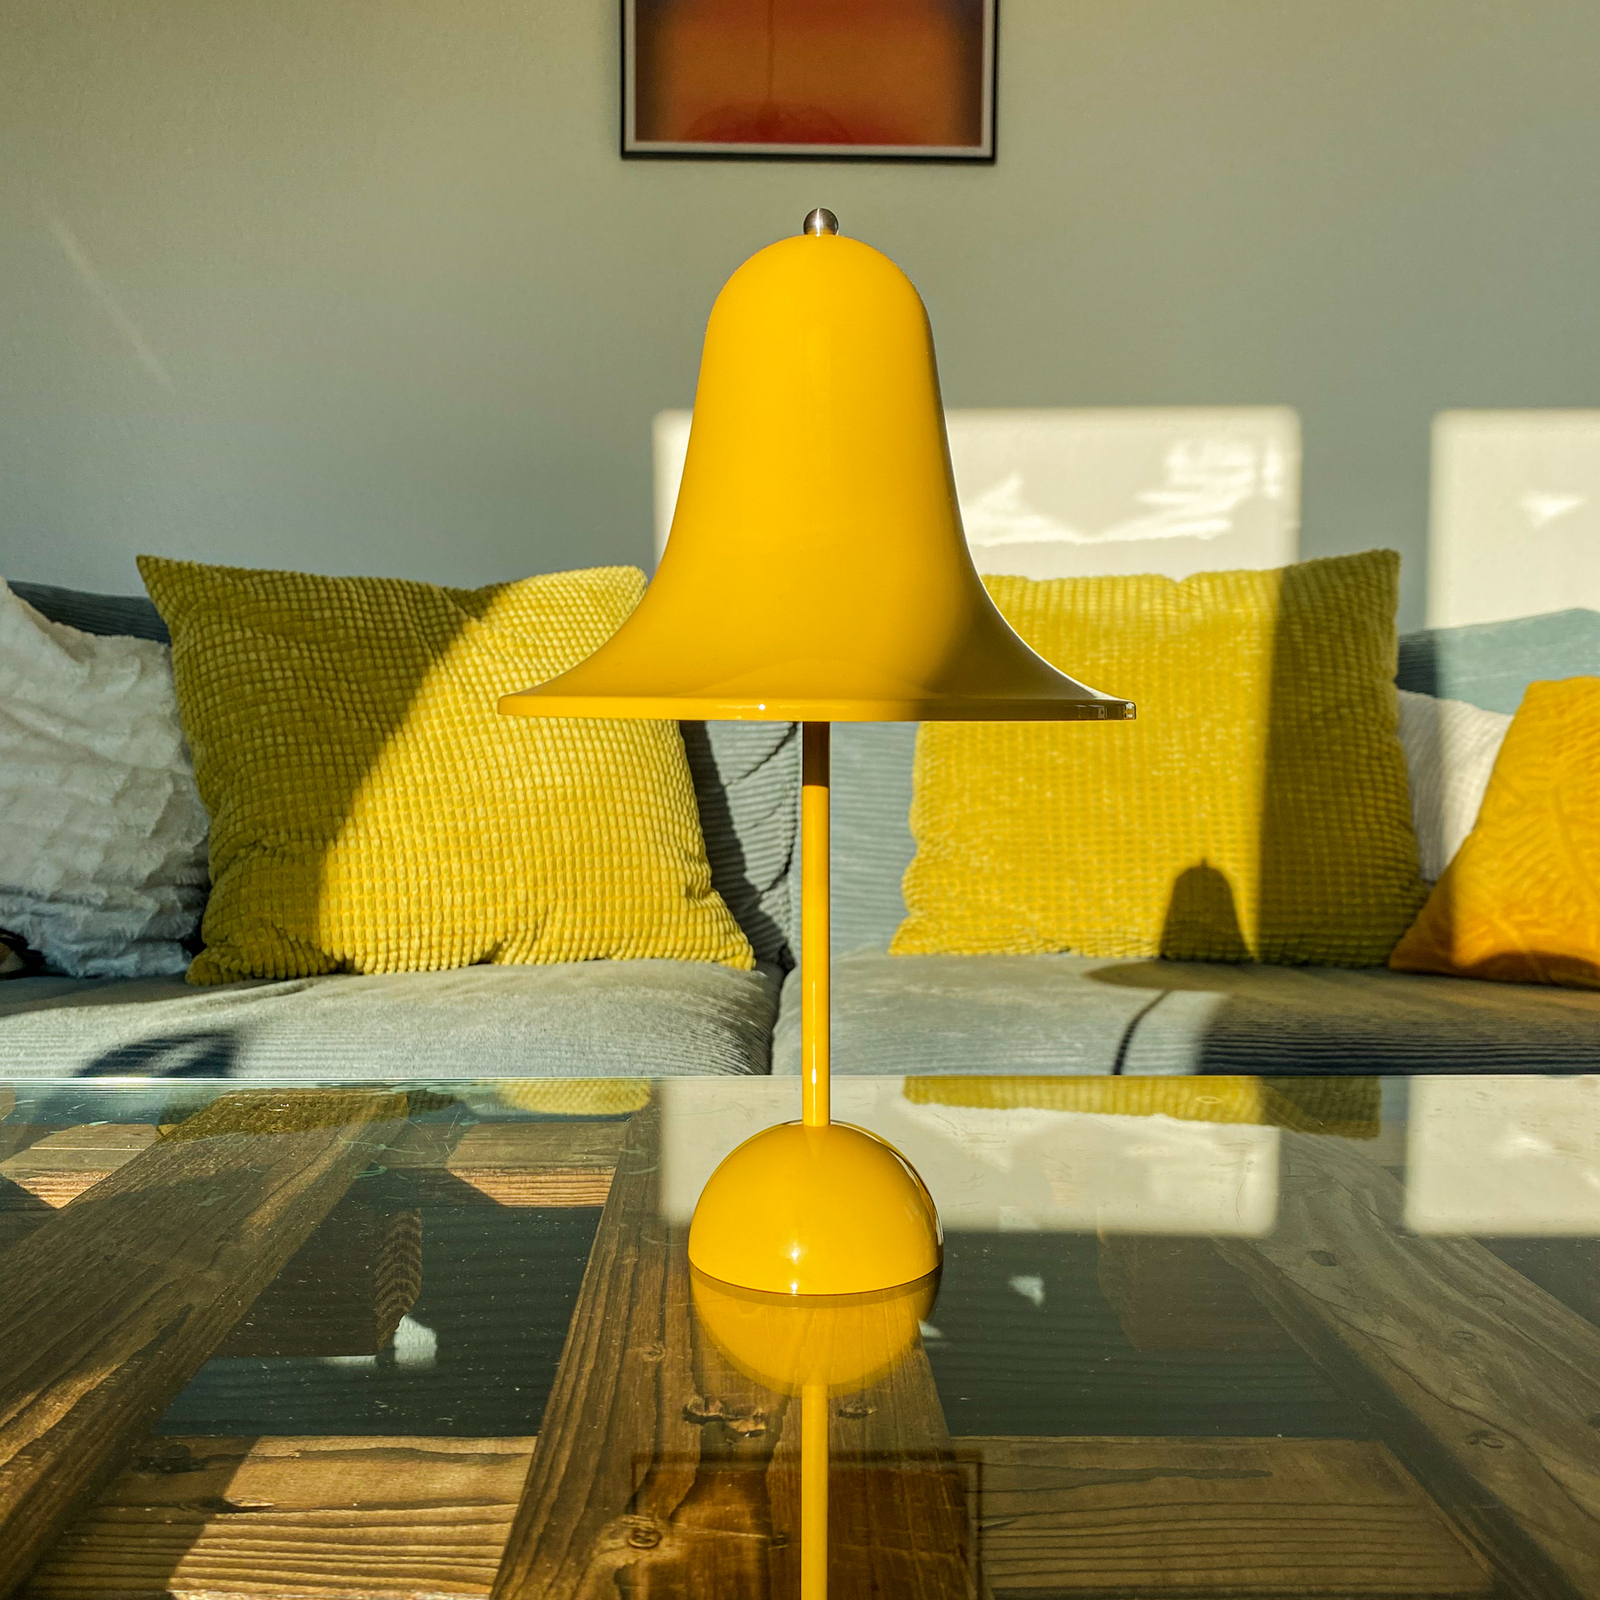 VERPAN Pantop table lamp warm yellow